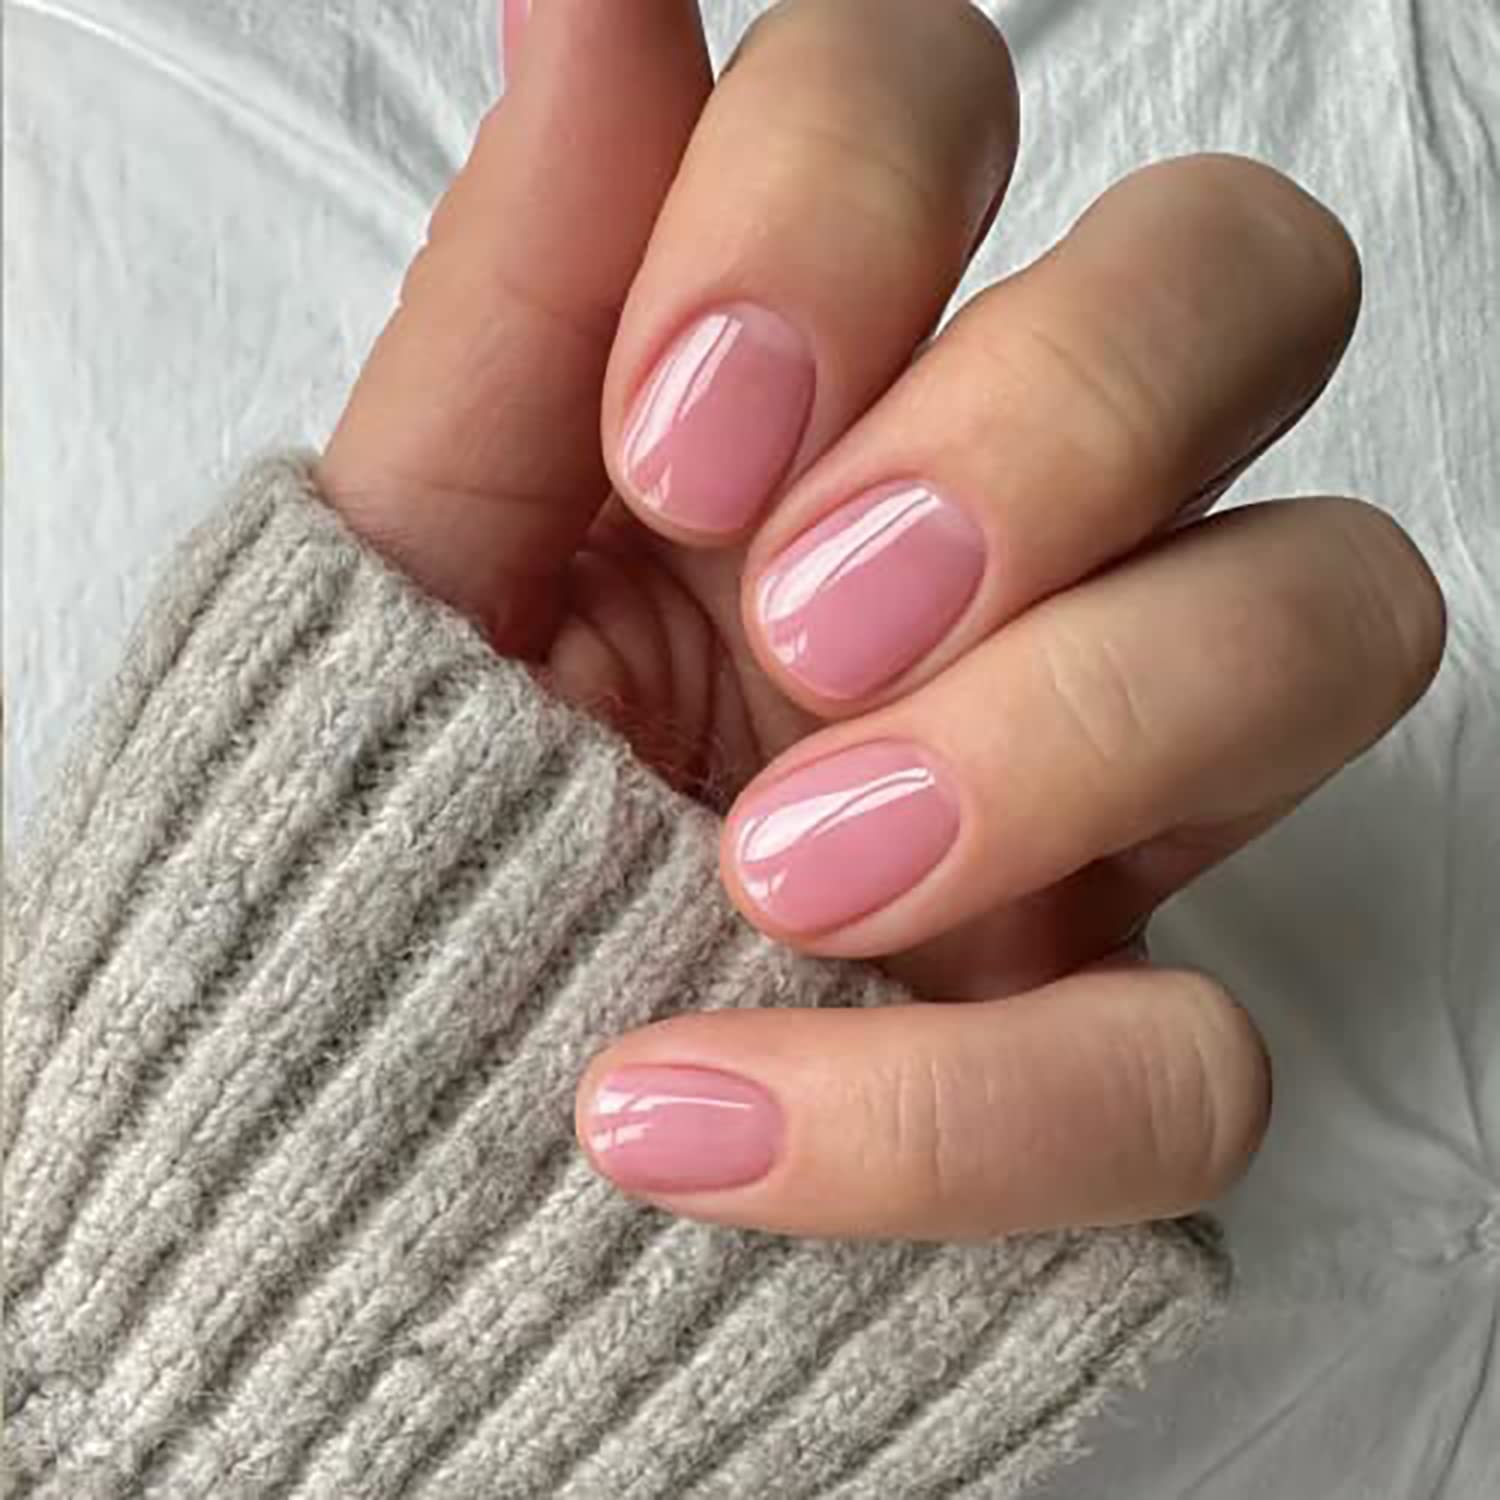 Premium quality nails by Nadia